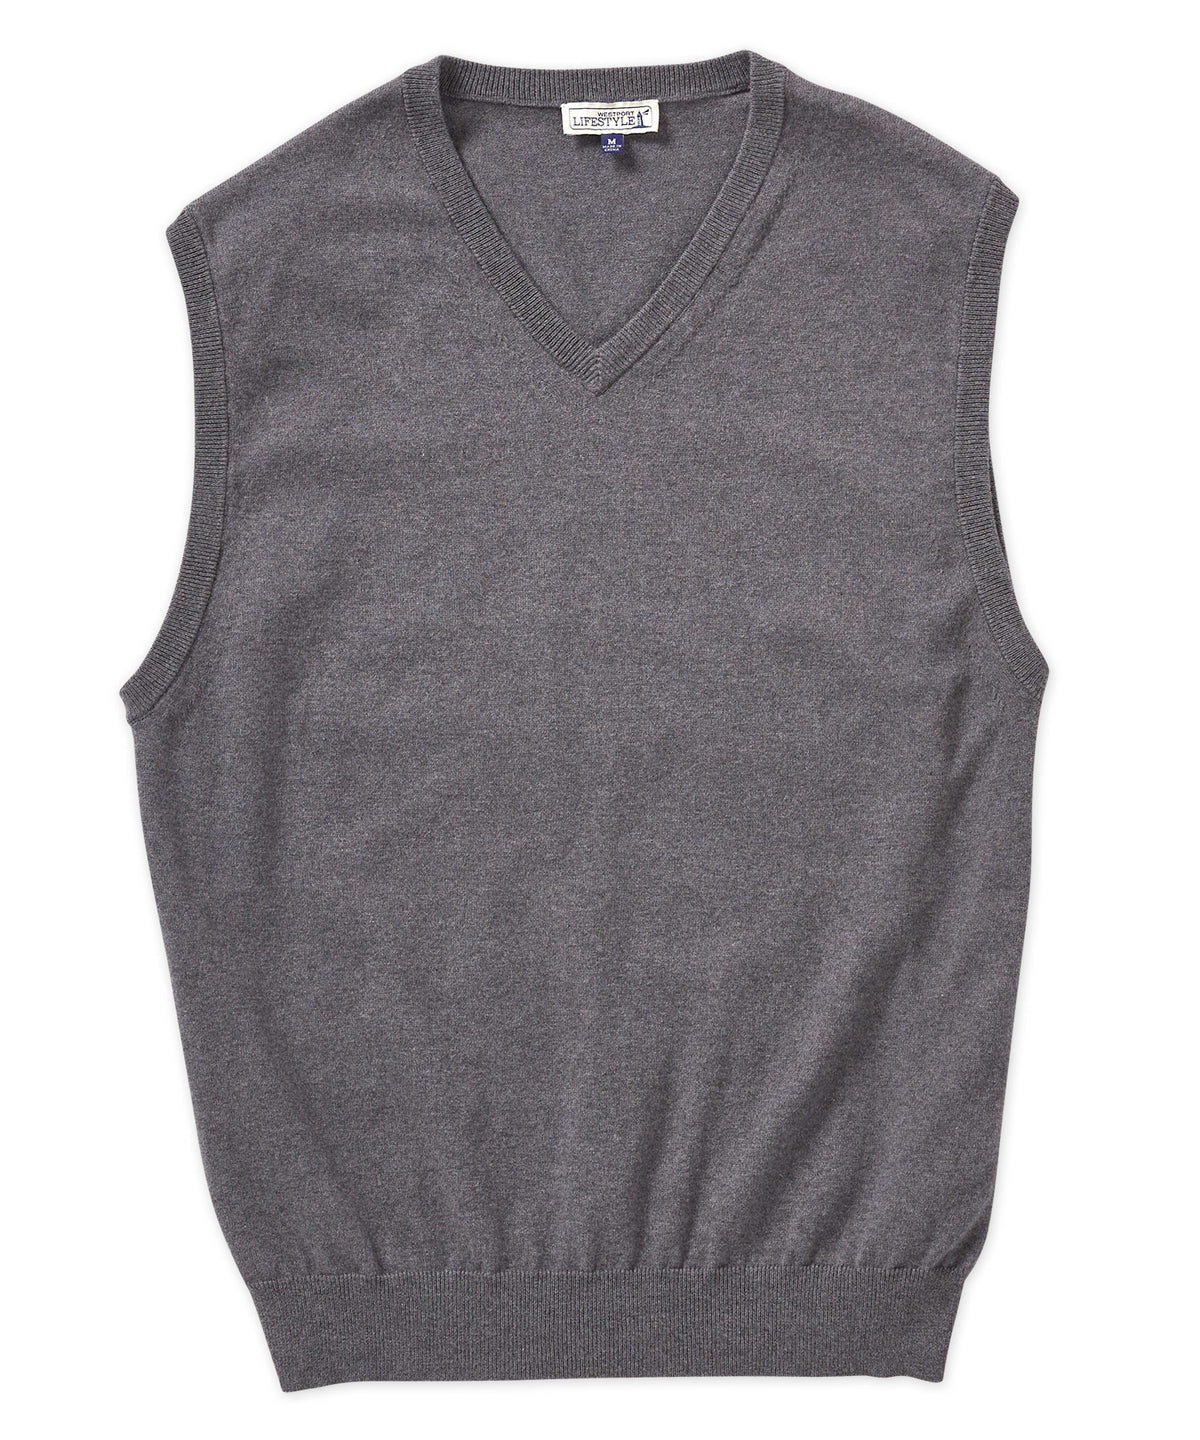 Westport Lifestyle Cotton Stretch V-Neck Sweater Vest, Men's Big & Tall